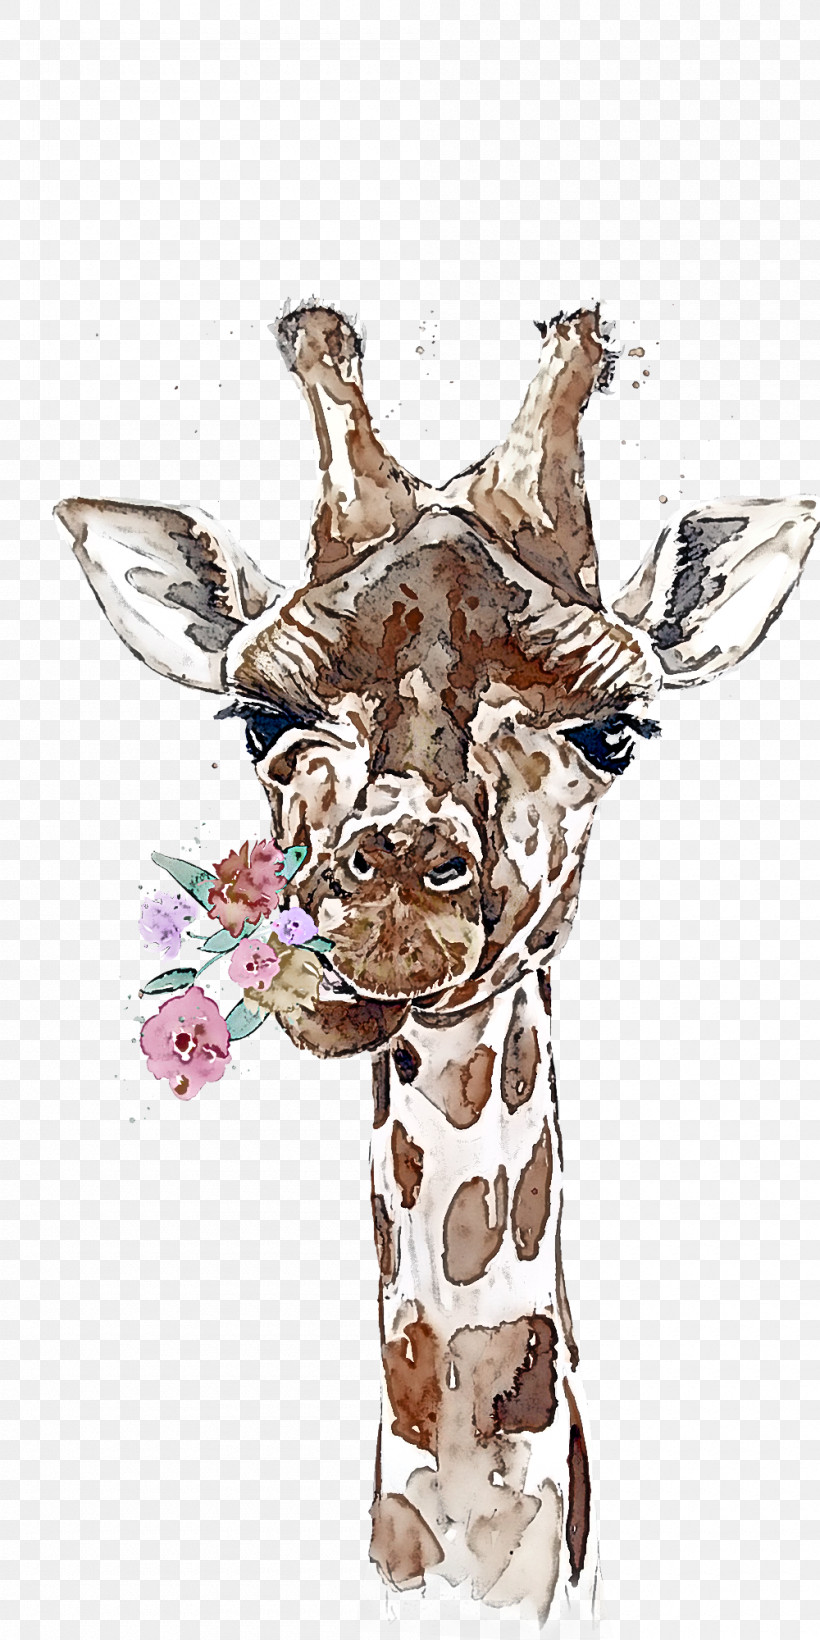 Giraffe Giraffidae Head Snout Wildlife, PNG, 1000x2000px, Giraffe, Giraffidae, Head, Snout, Wildlife Download Free